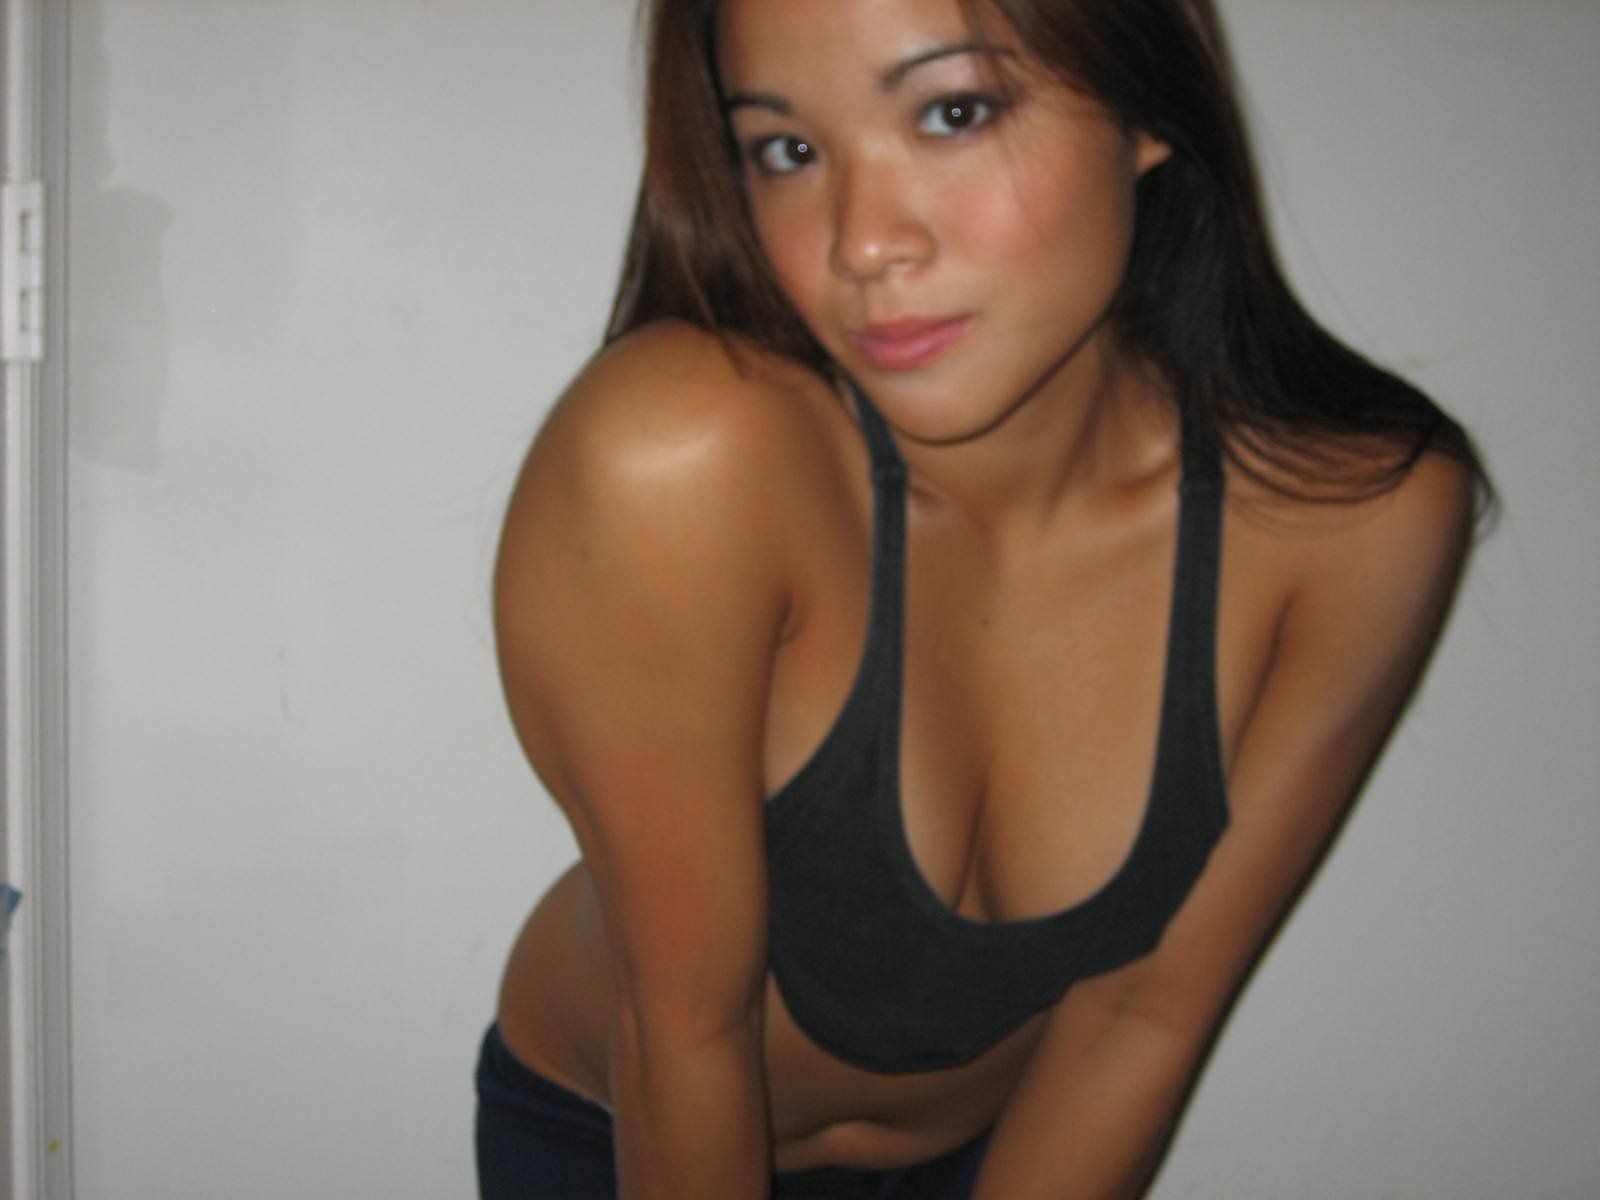 Asian women nude self pics pic